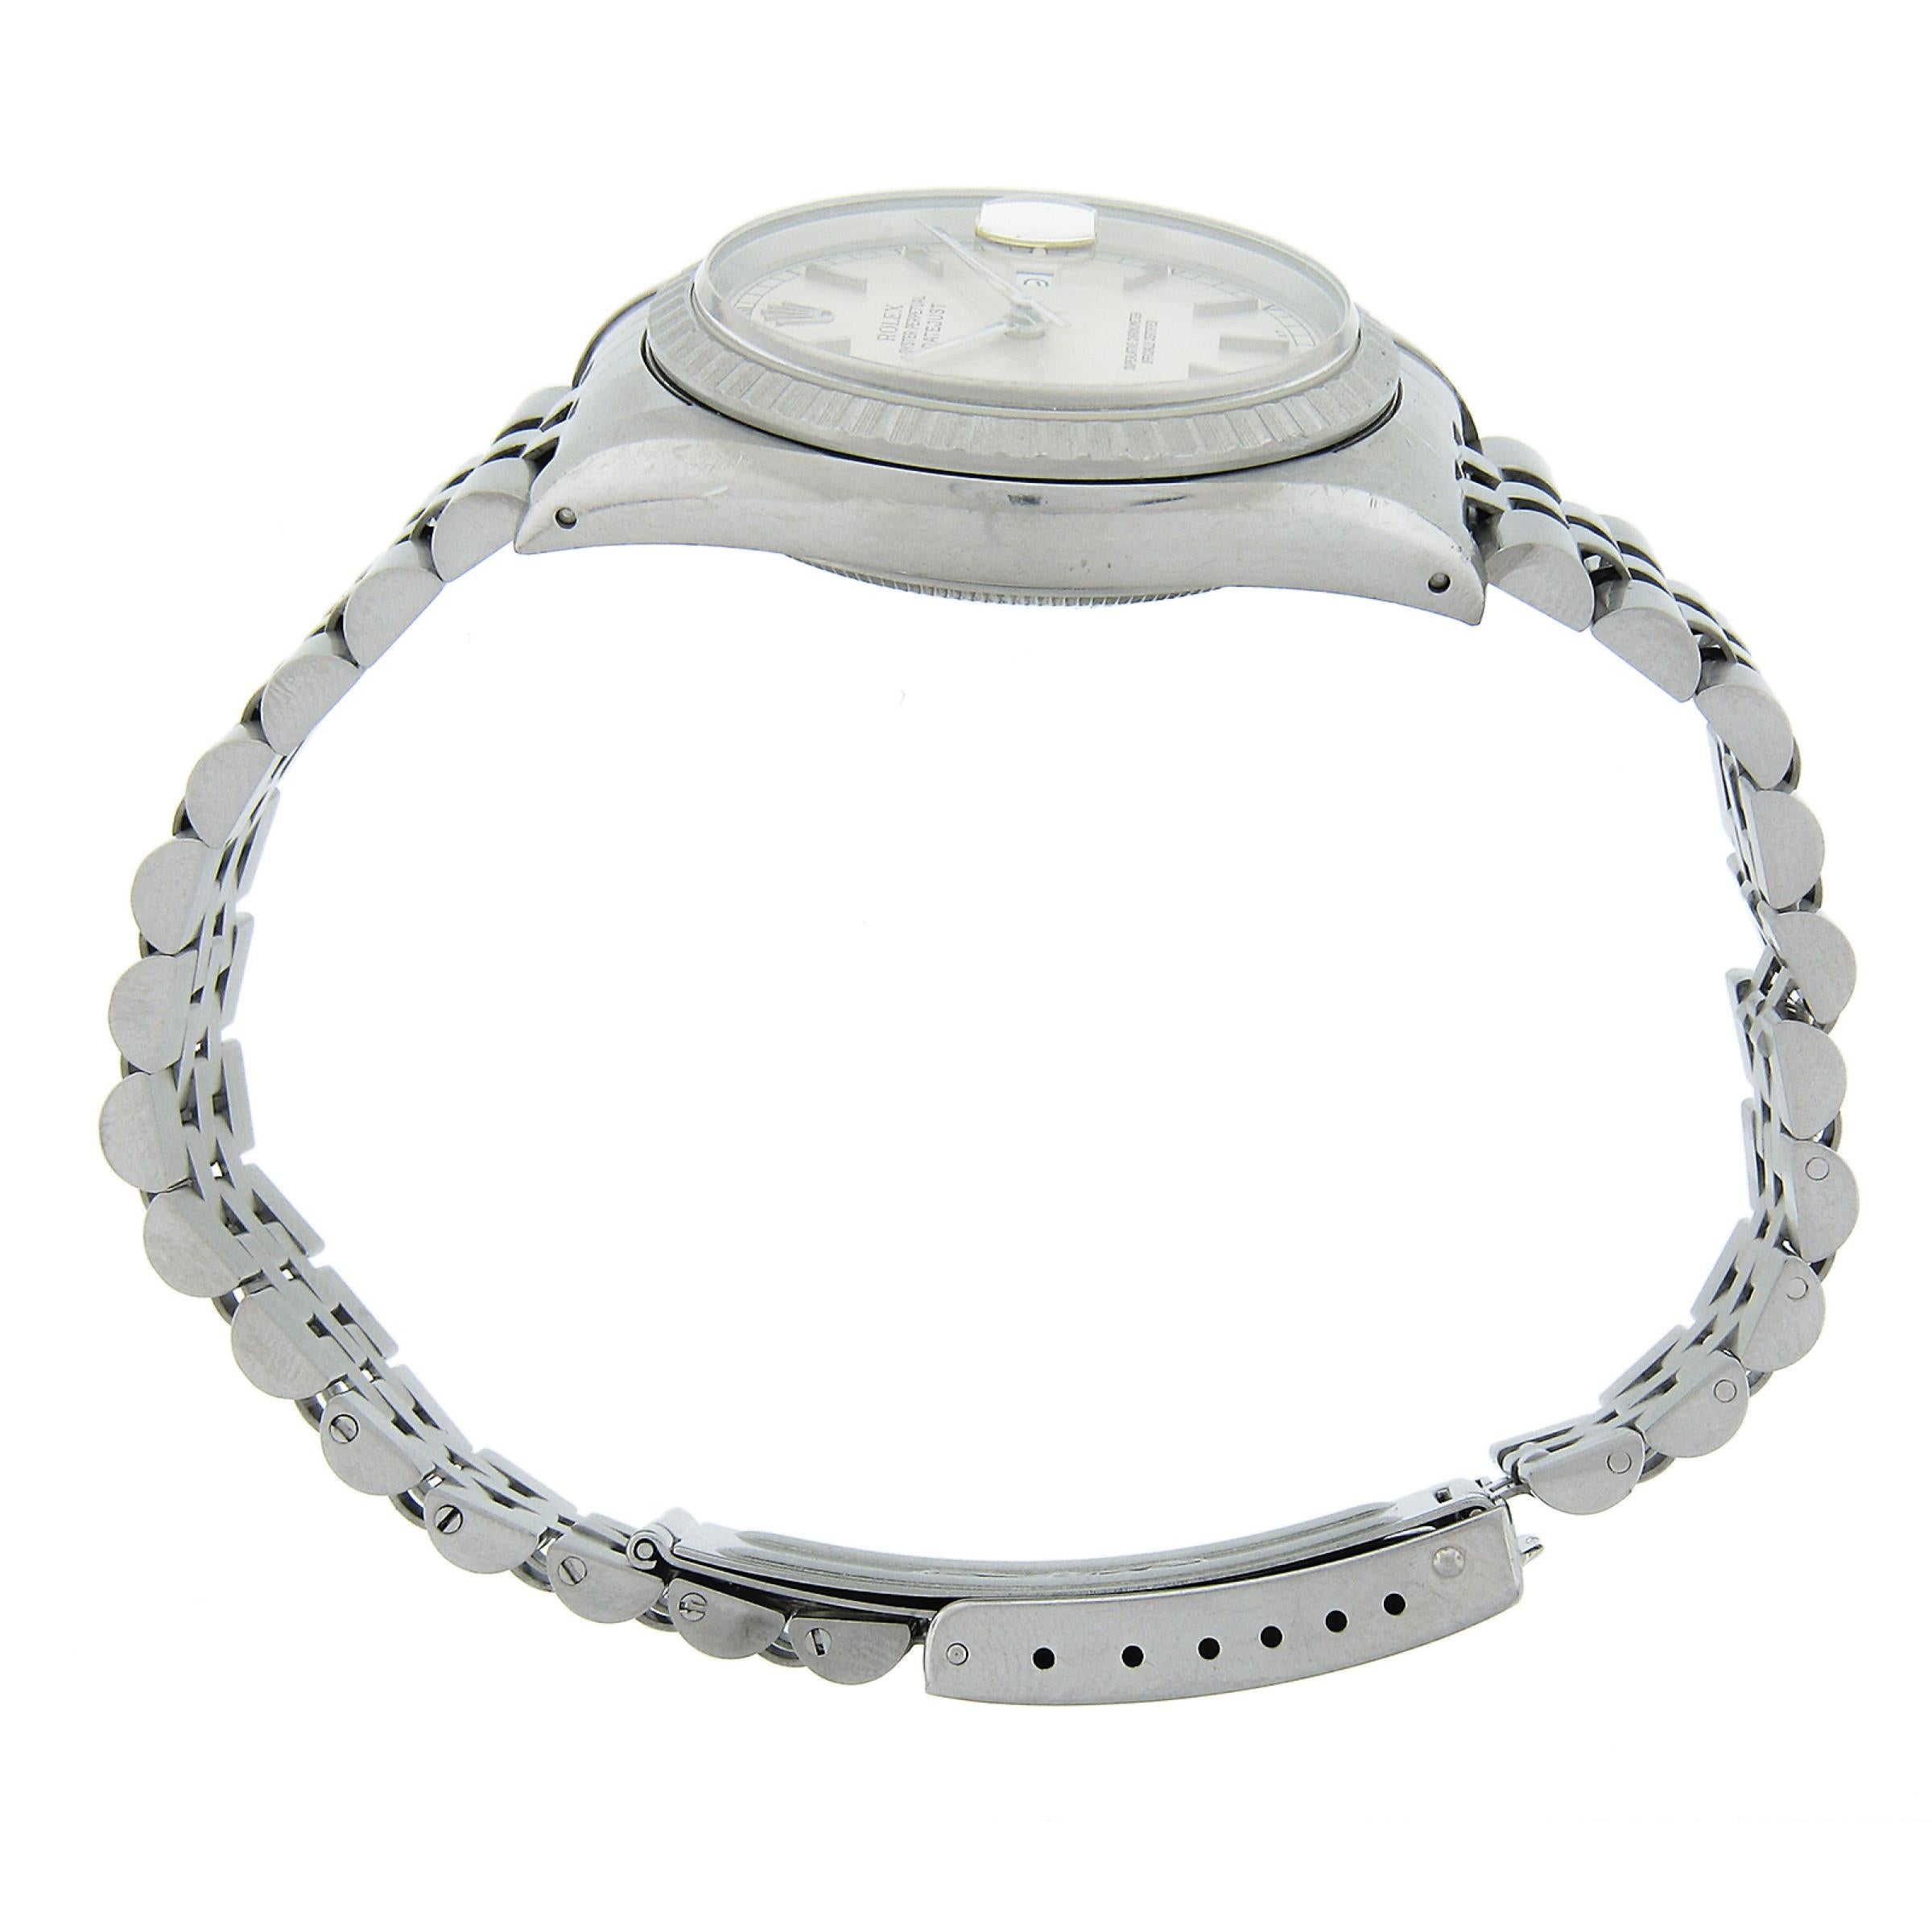 1989 Rolex Datejust Jubilee Engine Turned Bezel Silver Dial 36mm Watch Ref 16220 For Sale 1